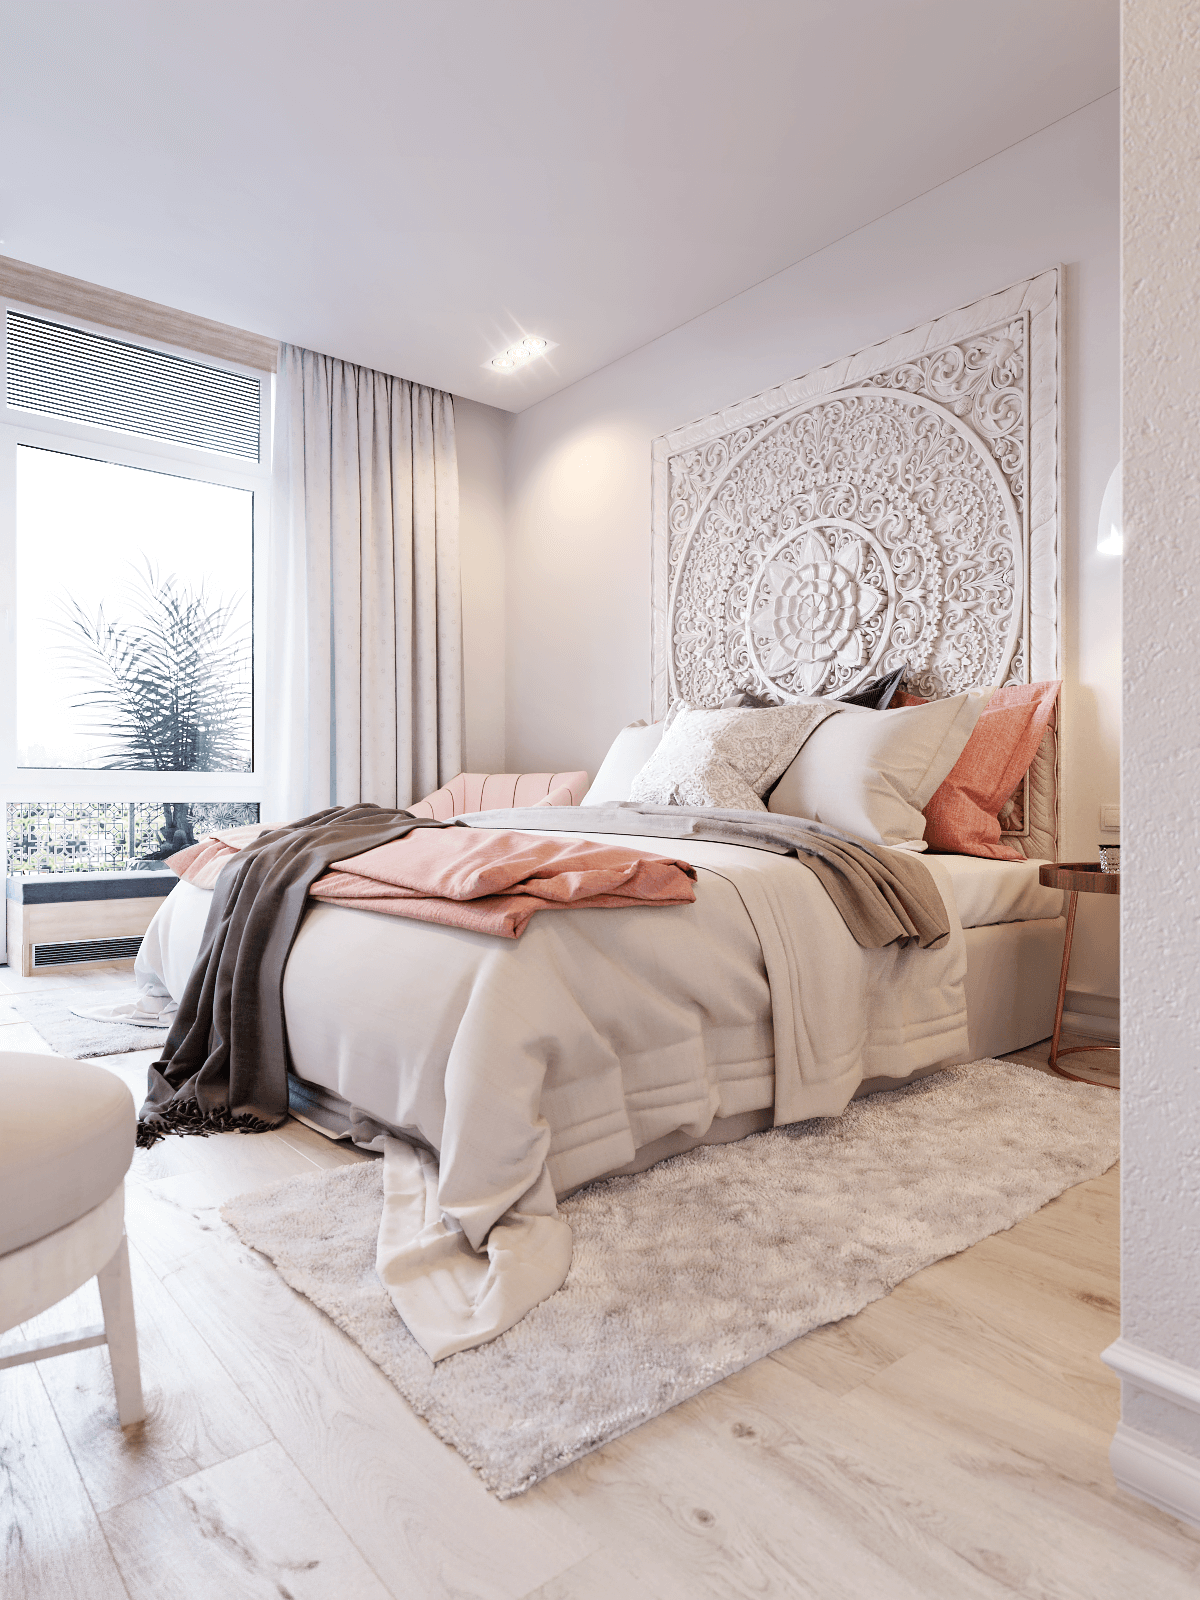 Tapestry Bedroom Decor